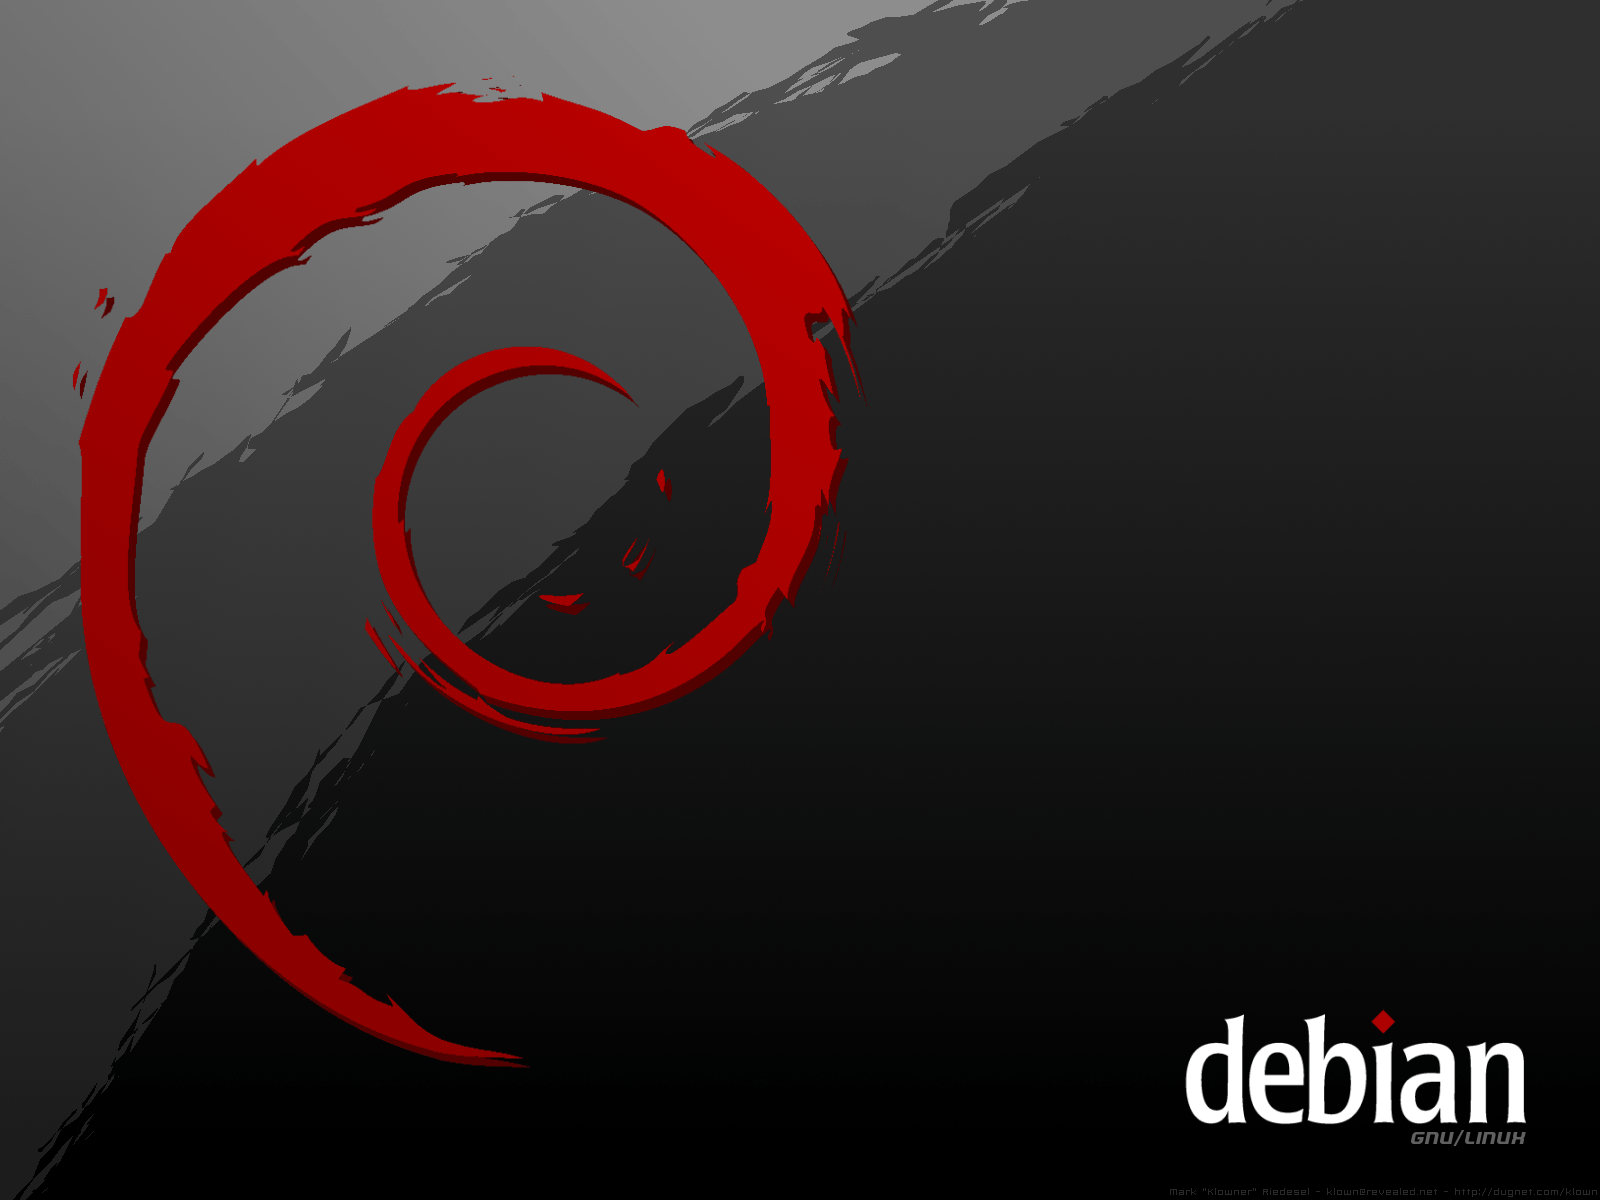 The Swirl of Debian" wallpaper at klowner